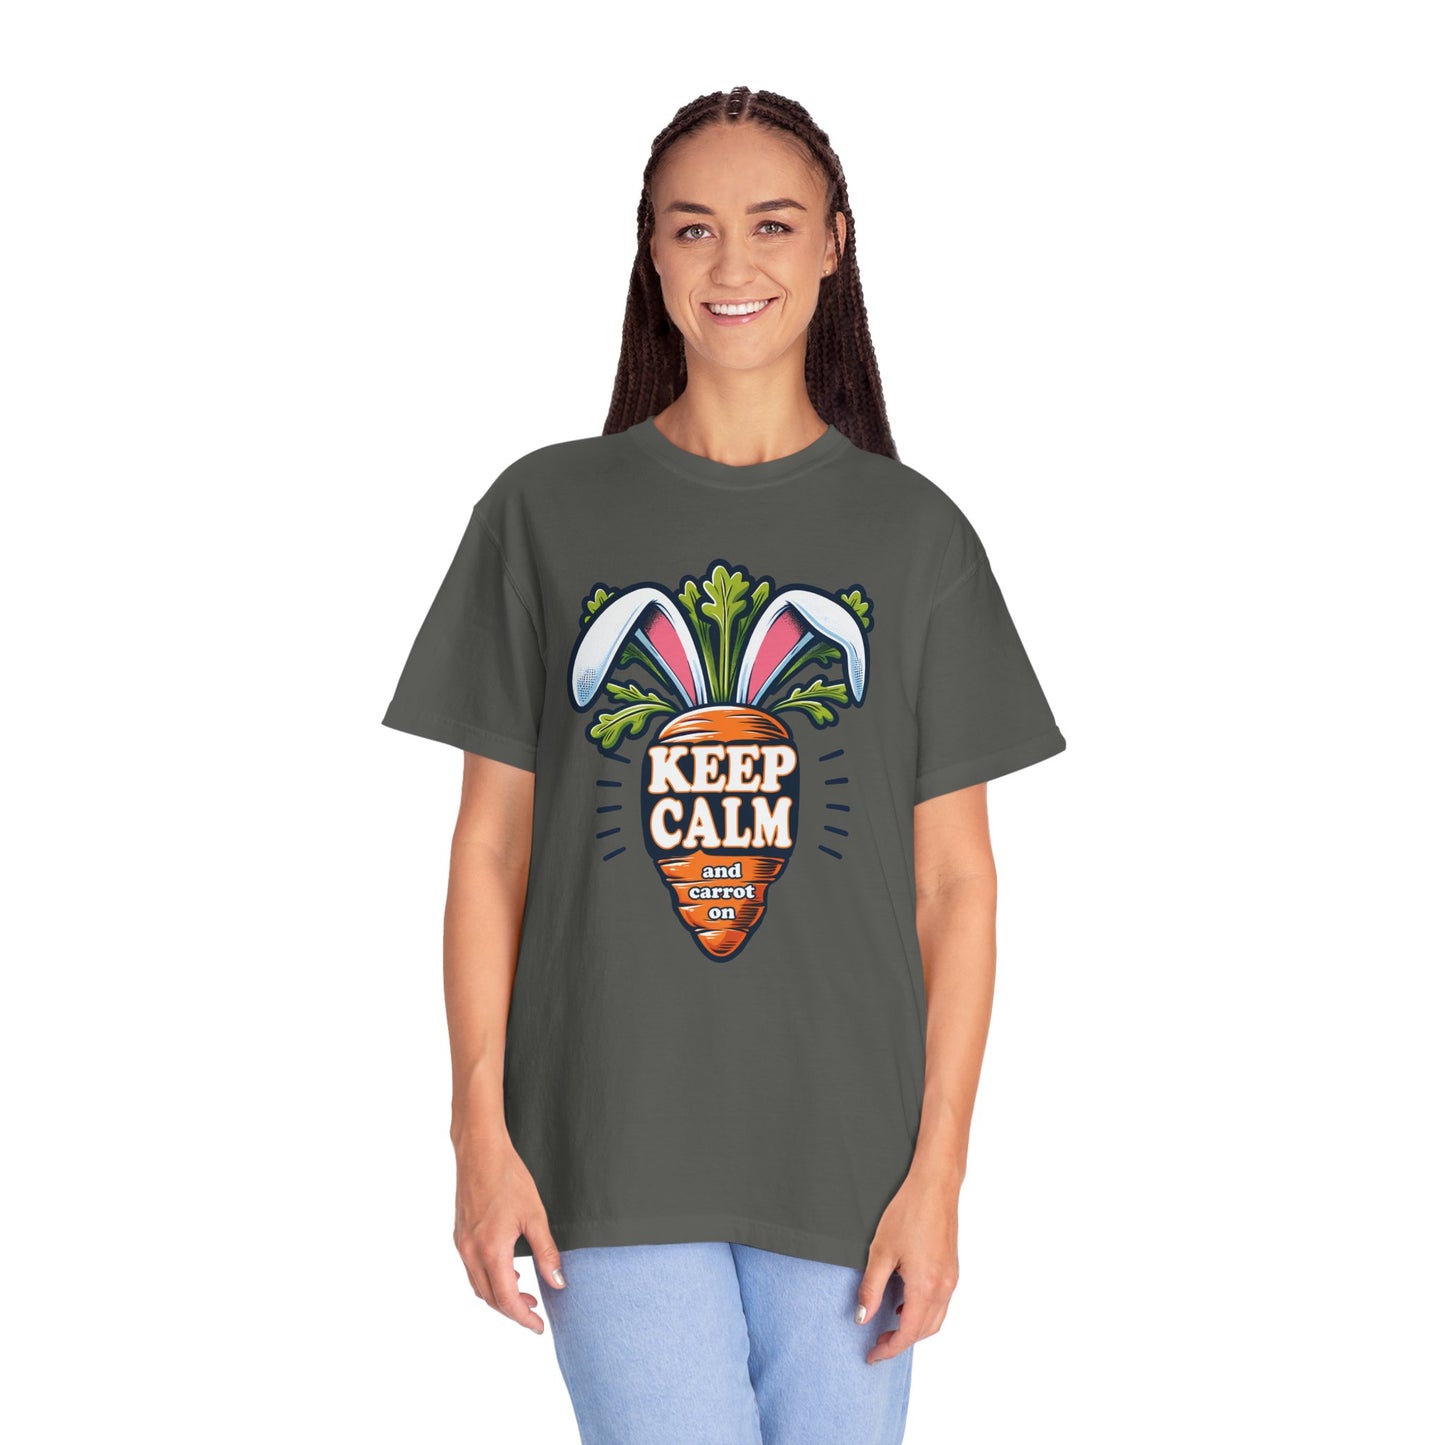 Keep Calm and Carrot On Garment-Dyed T-shirt, Easter Tee, Funny Bunny Rabbit Ears Shirt